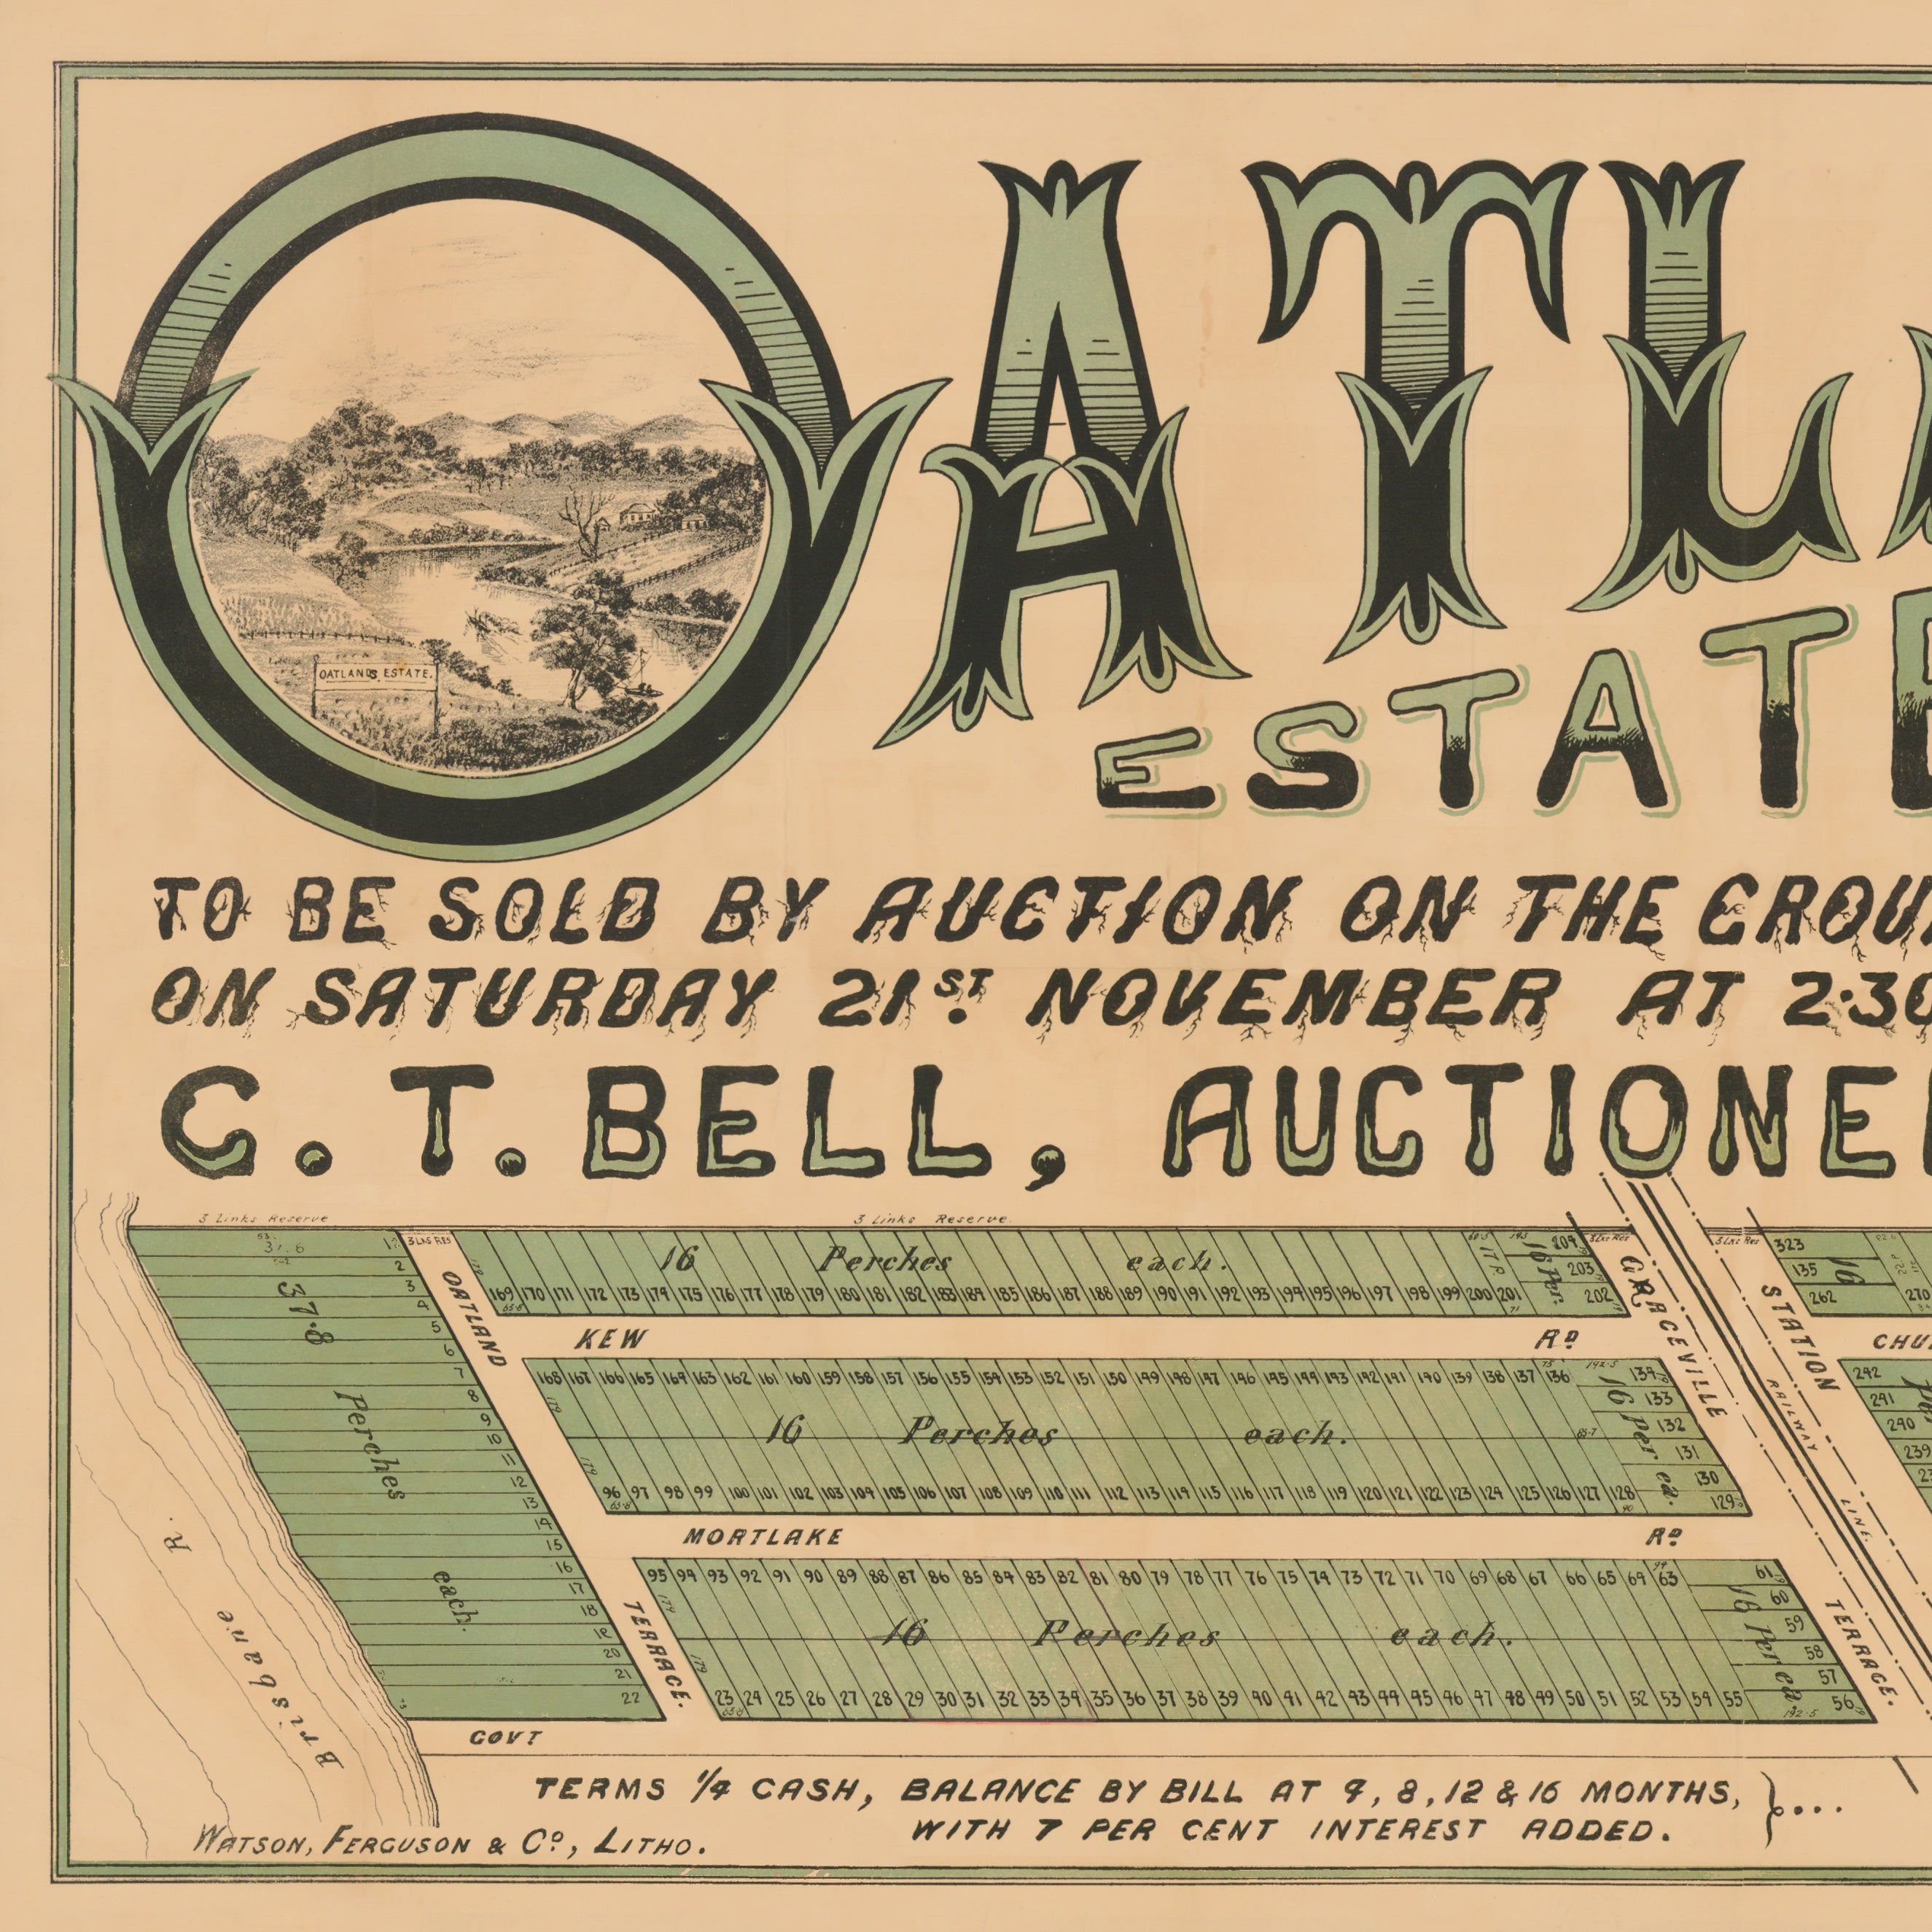 1885 Graceville - Oatland's Estate